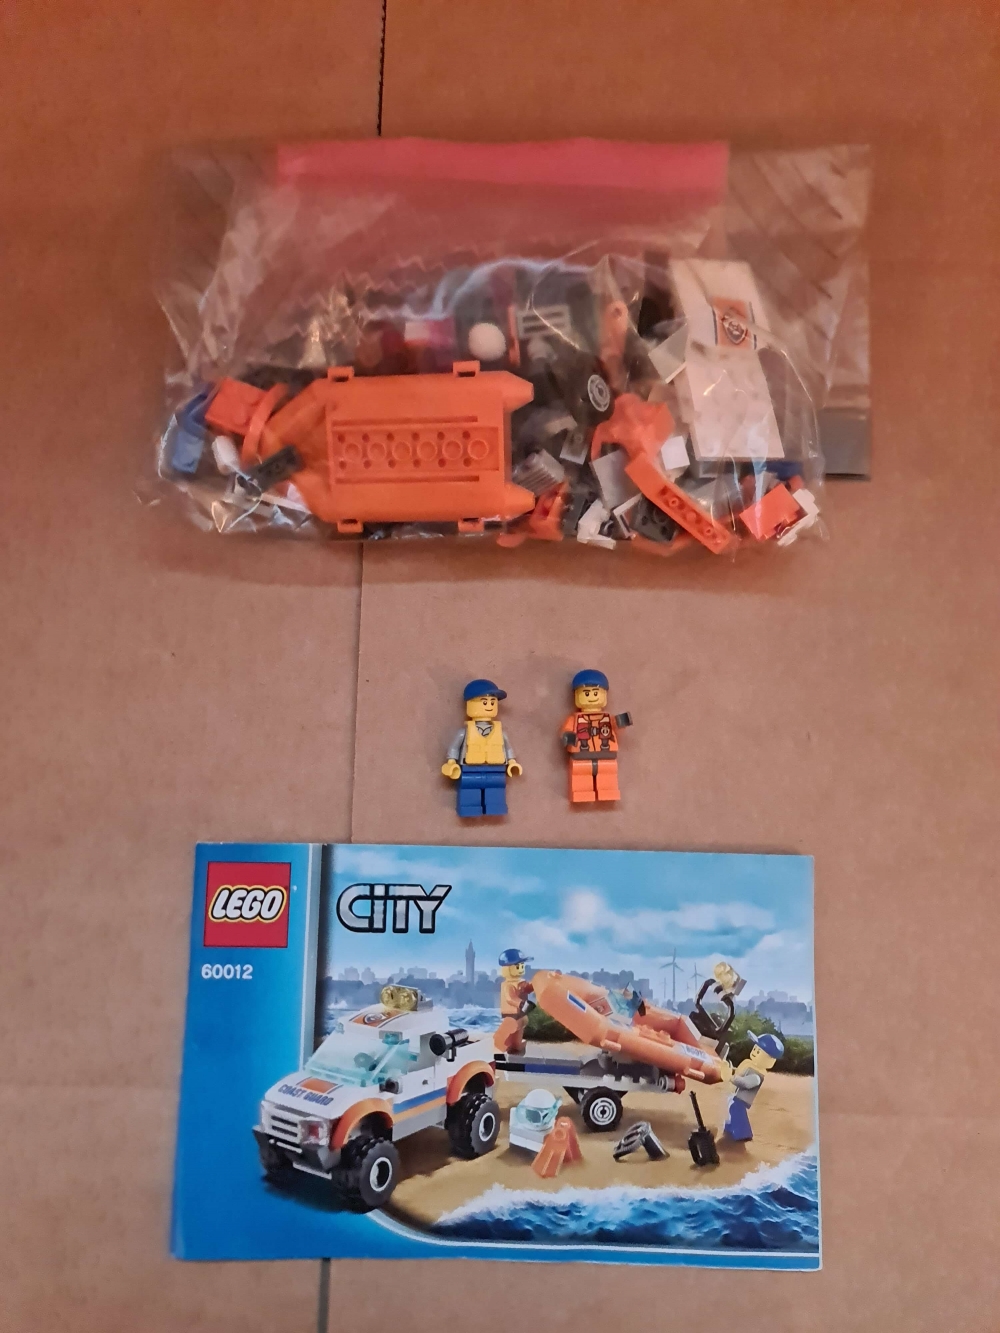 Sett 60012 fra Lego City serien.

Meget pent. Komplett med manual.
